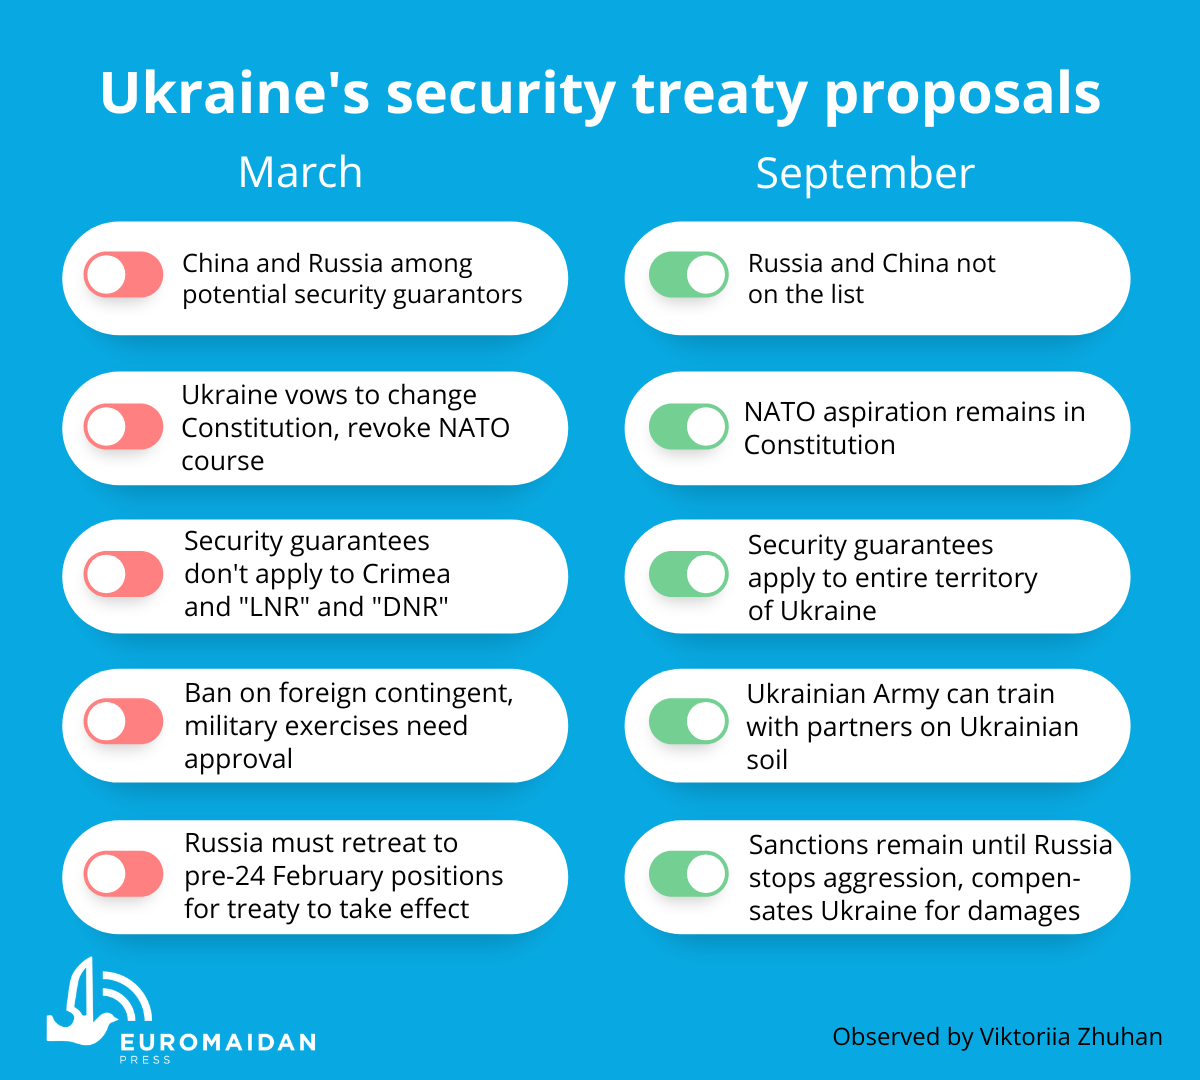 Ukraine retains NATO aspirations in new treaty for security guarantees ~~